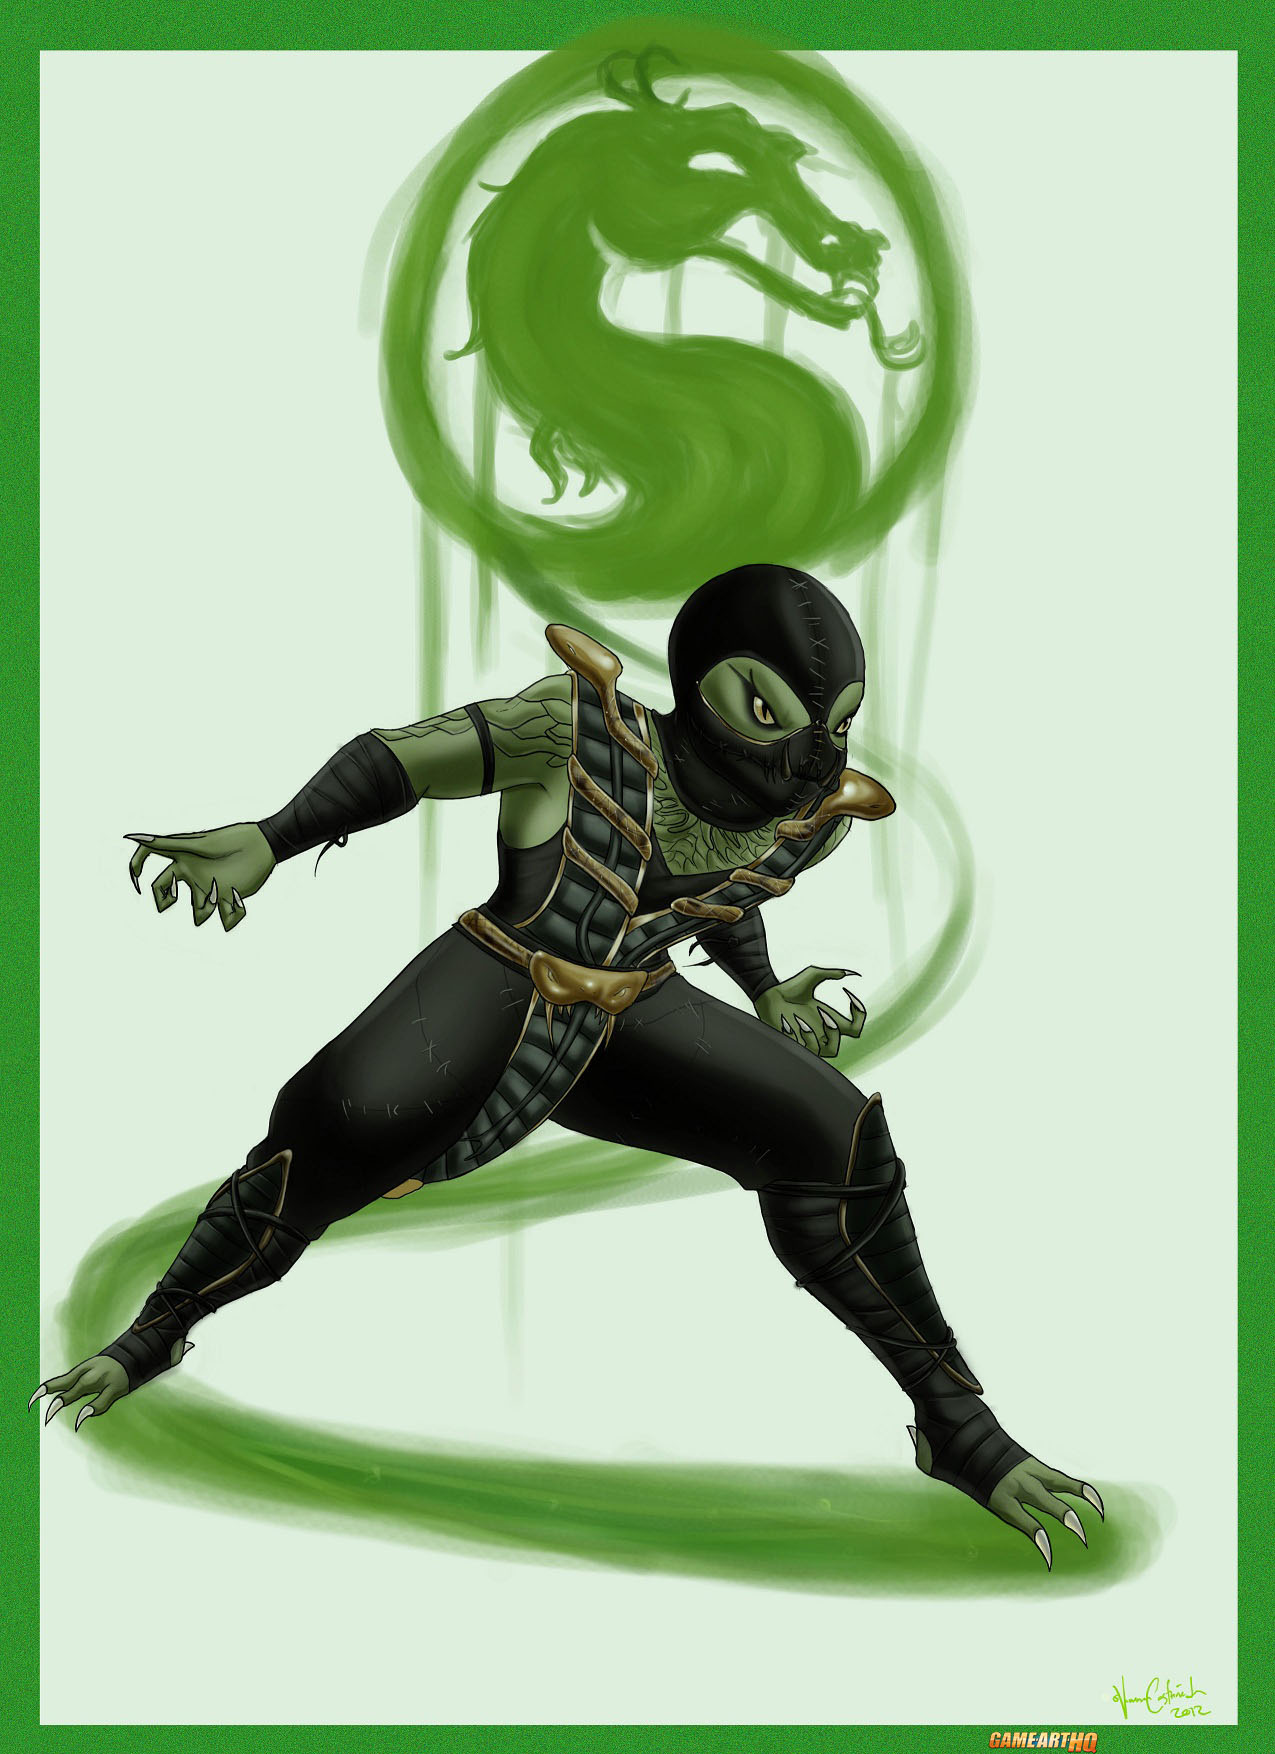 Reptile (Mortal Kombat 9) by UGSF on DeviantArt